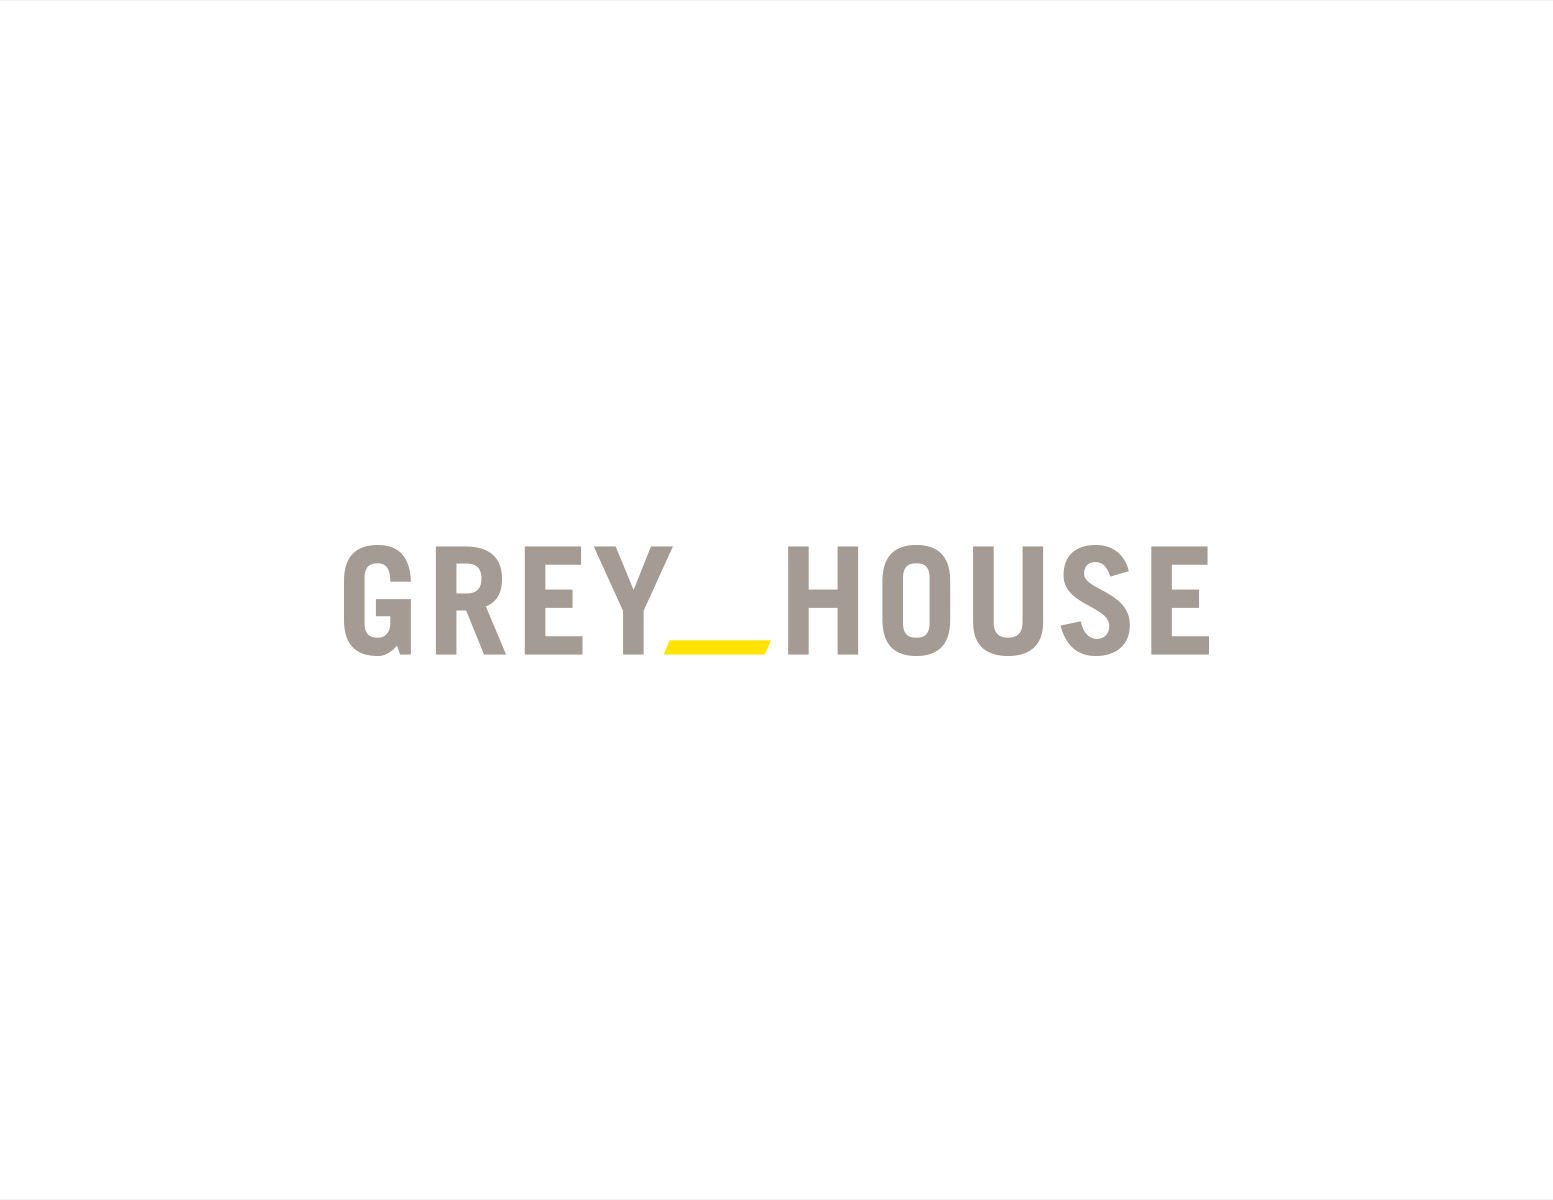 Grey_House_01.jpg